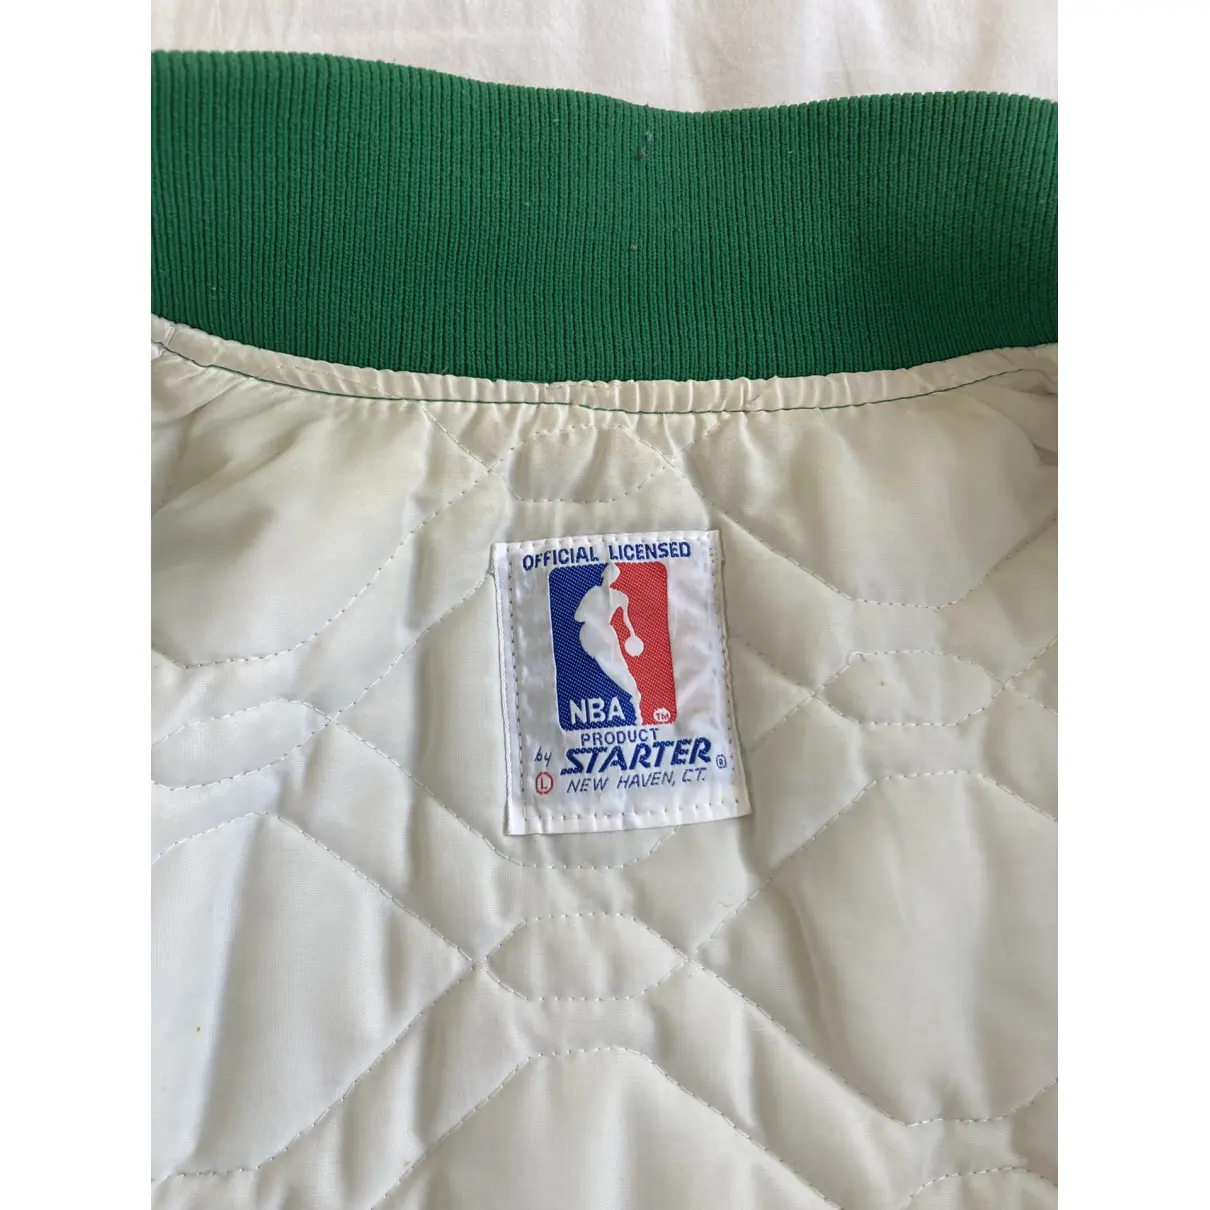 Buy NBA Jacket online